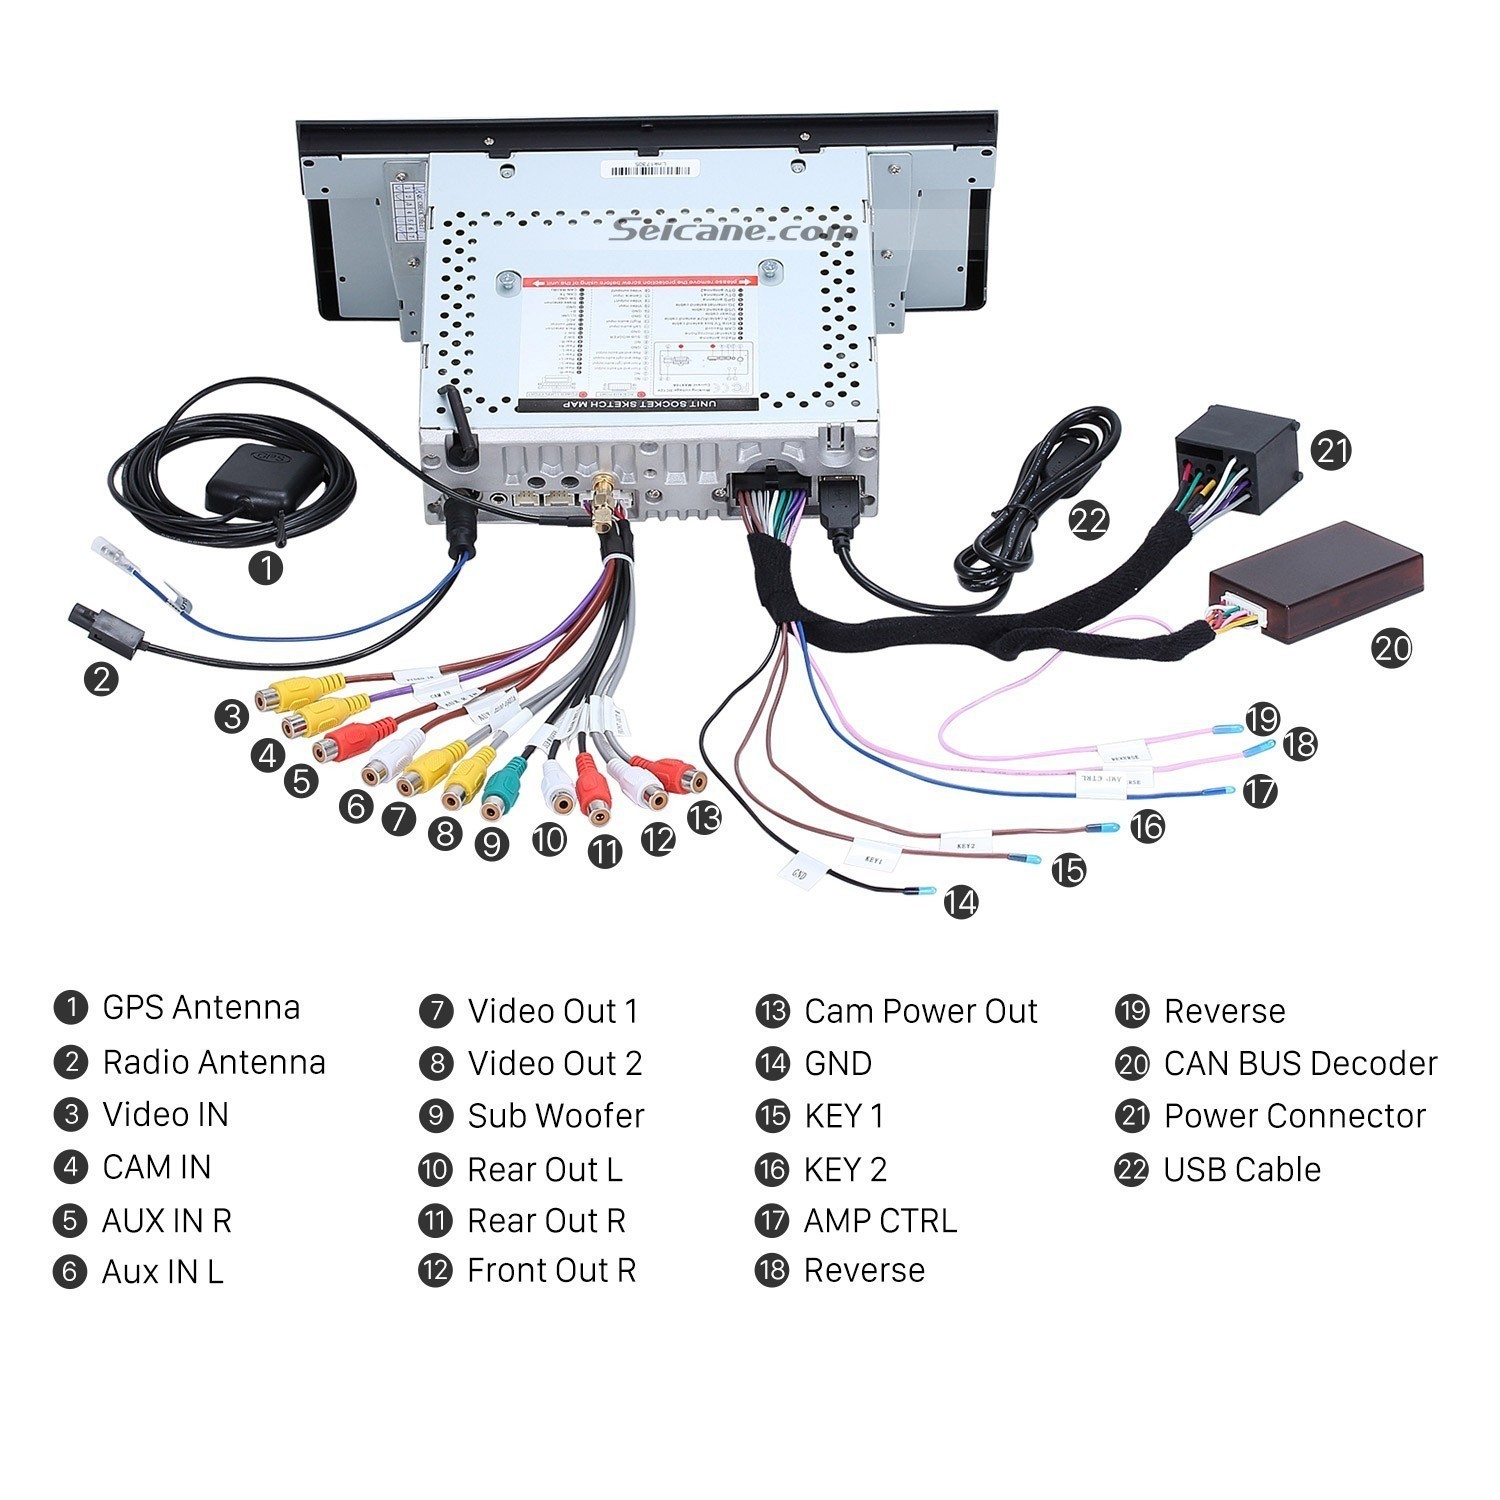 Car Amplifier Diagram Multiple Amplifier Wiring Diagram Valid Amp Wiring Diagram Car Of Car Amplifier Diagram